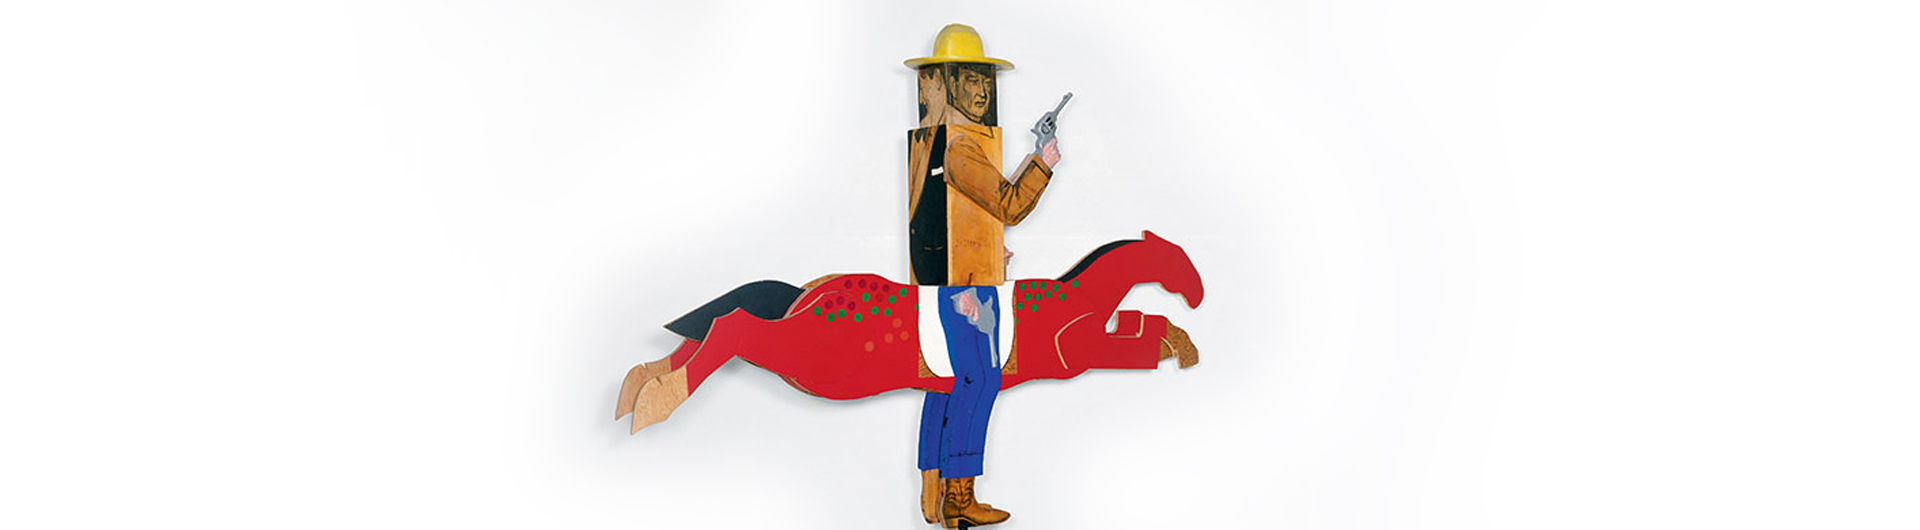 Abstract sculpture of John Wayne on a horse by Marisol (Escobar)